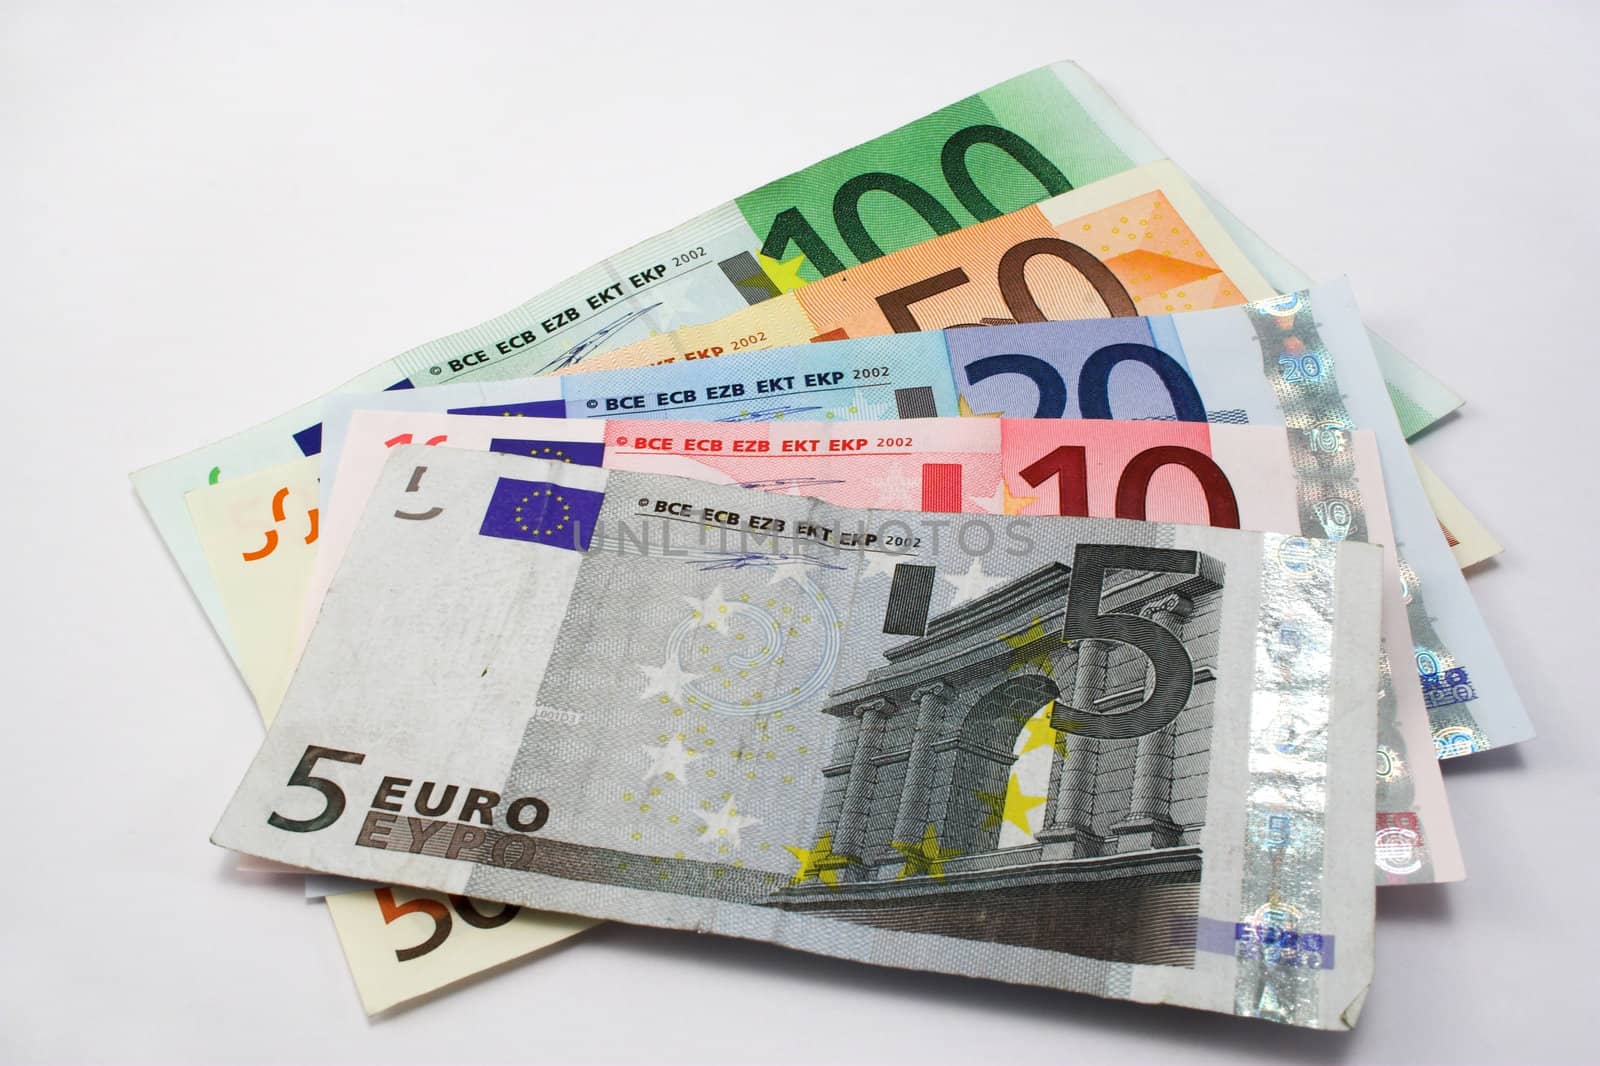 A pile of Euros